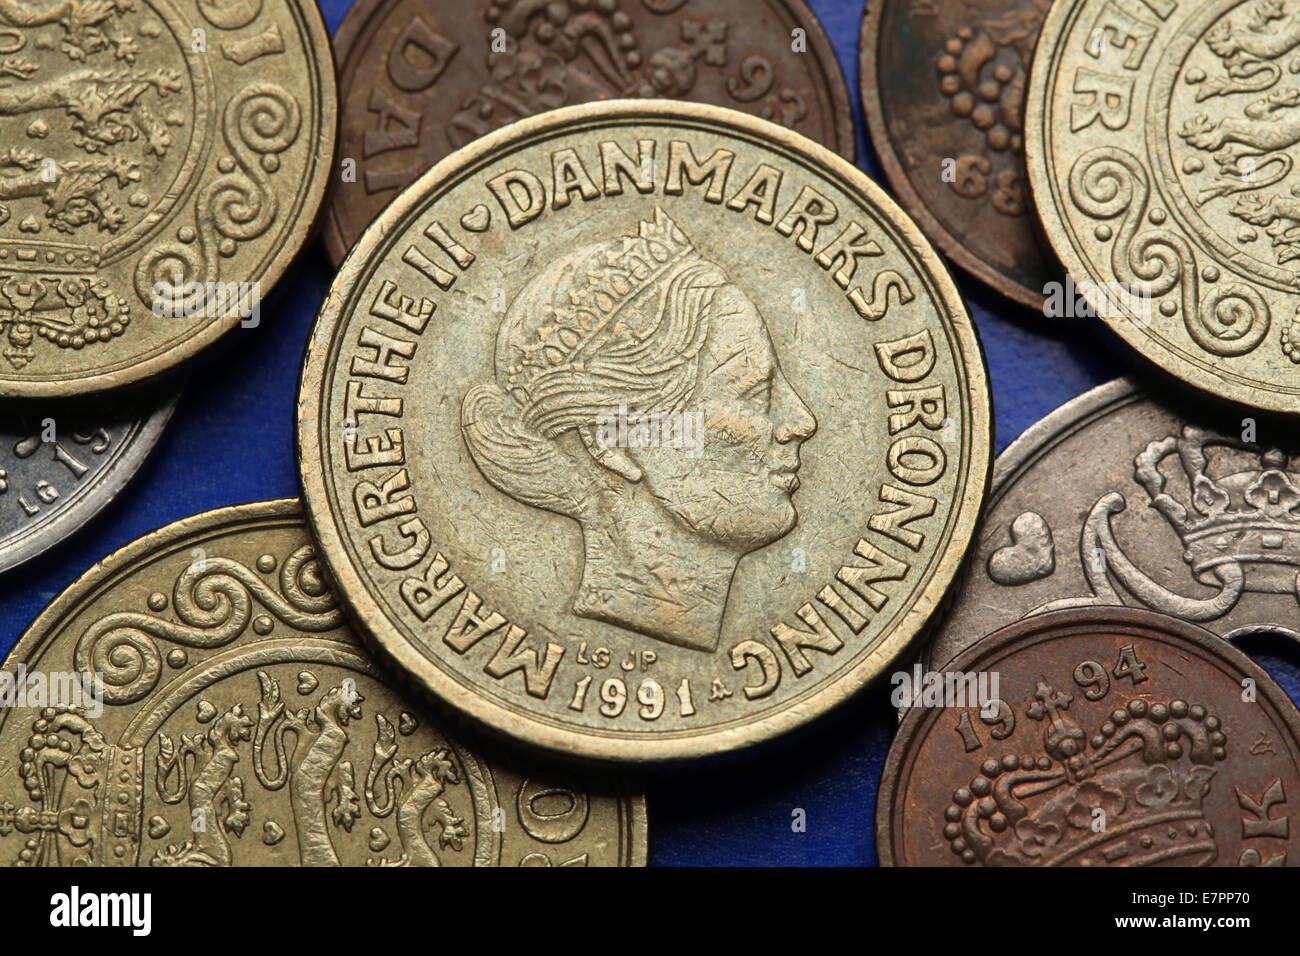 Coins of Denmark. Queen Margrethe II of Denmark depicted in Danish krone coins. Stock Photo